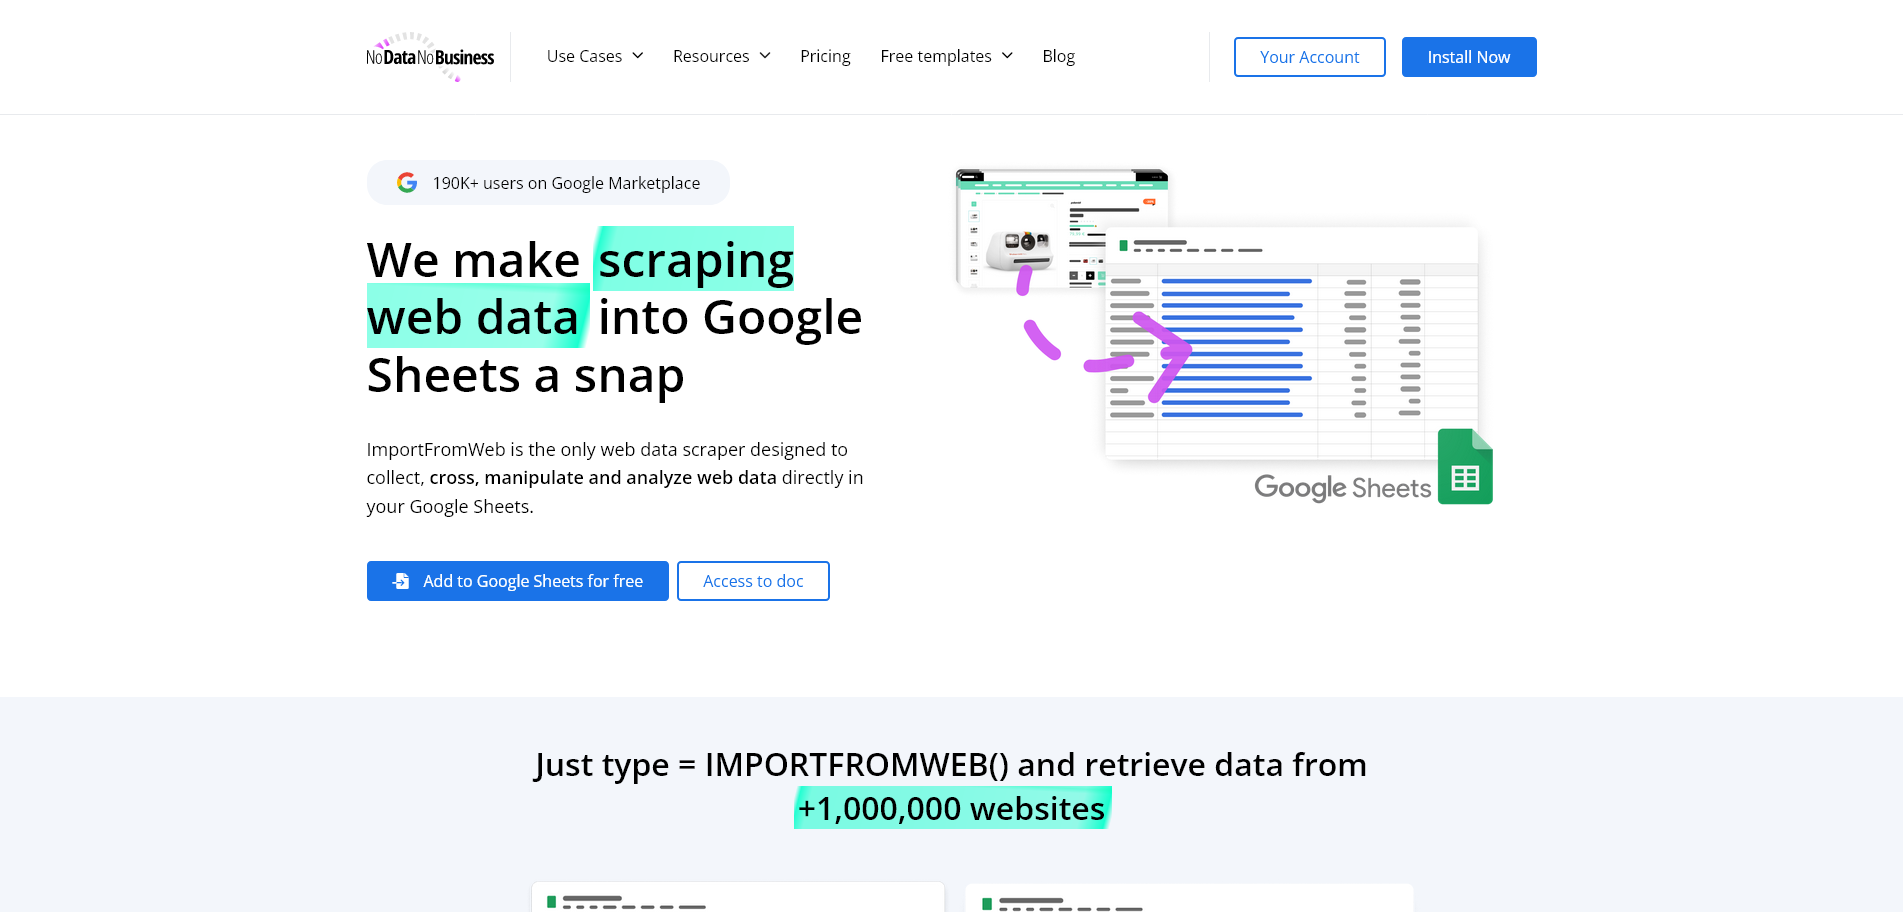 ImportFromWeb - Extract website data from Google sheets NoDataNoBusiness